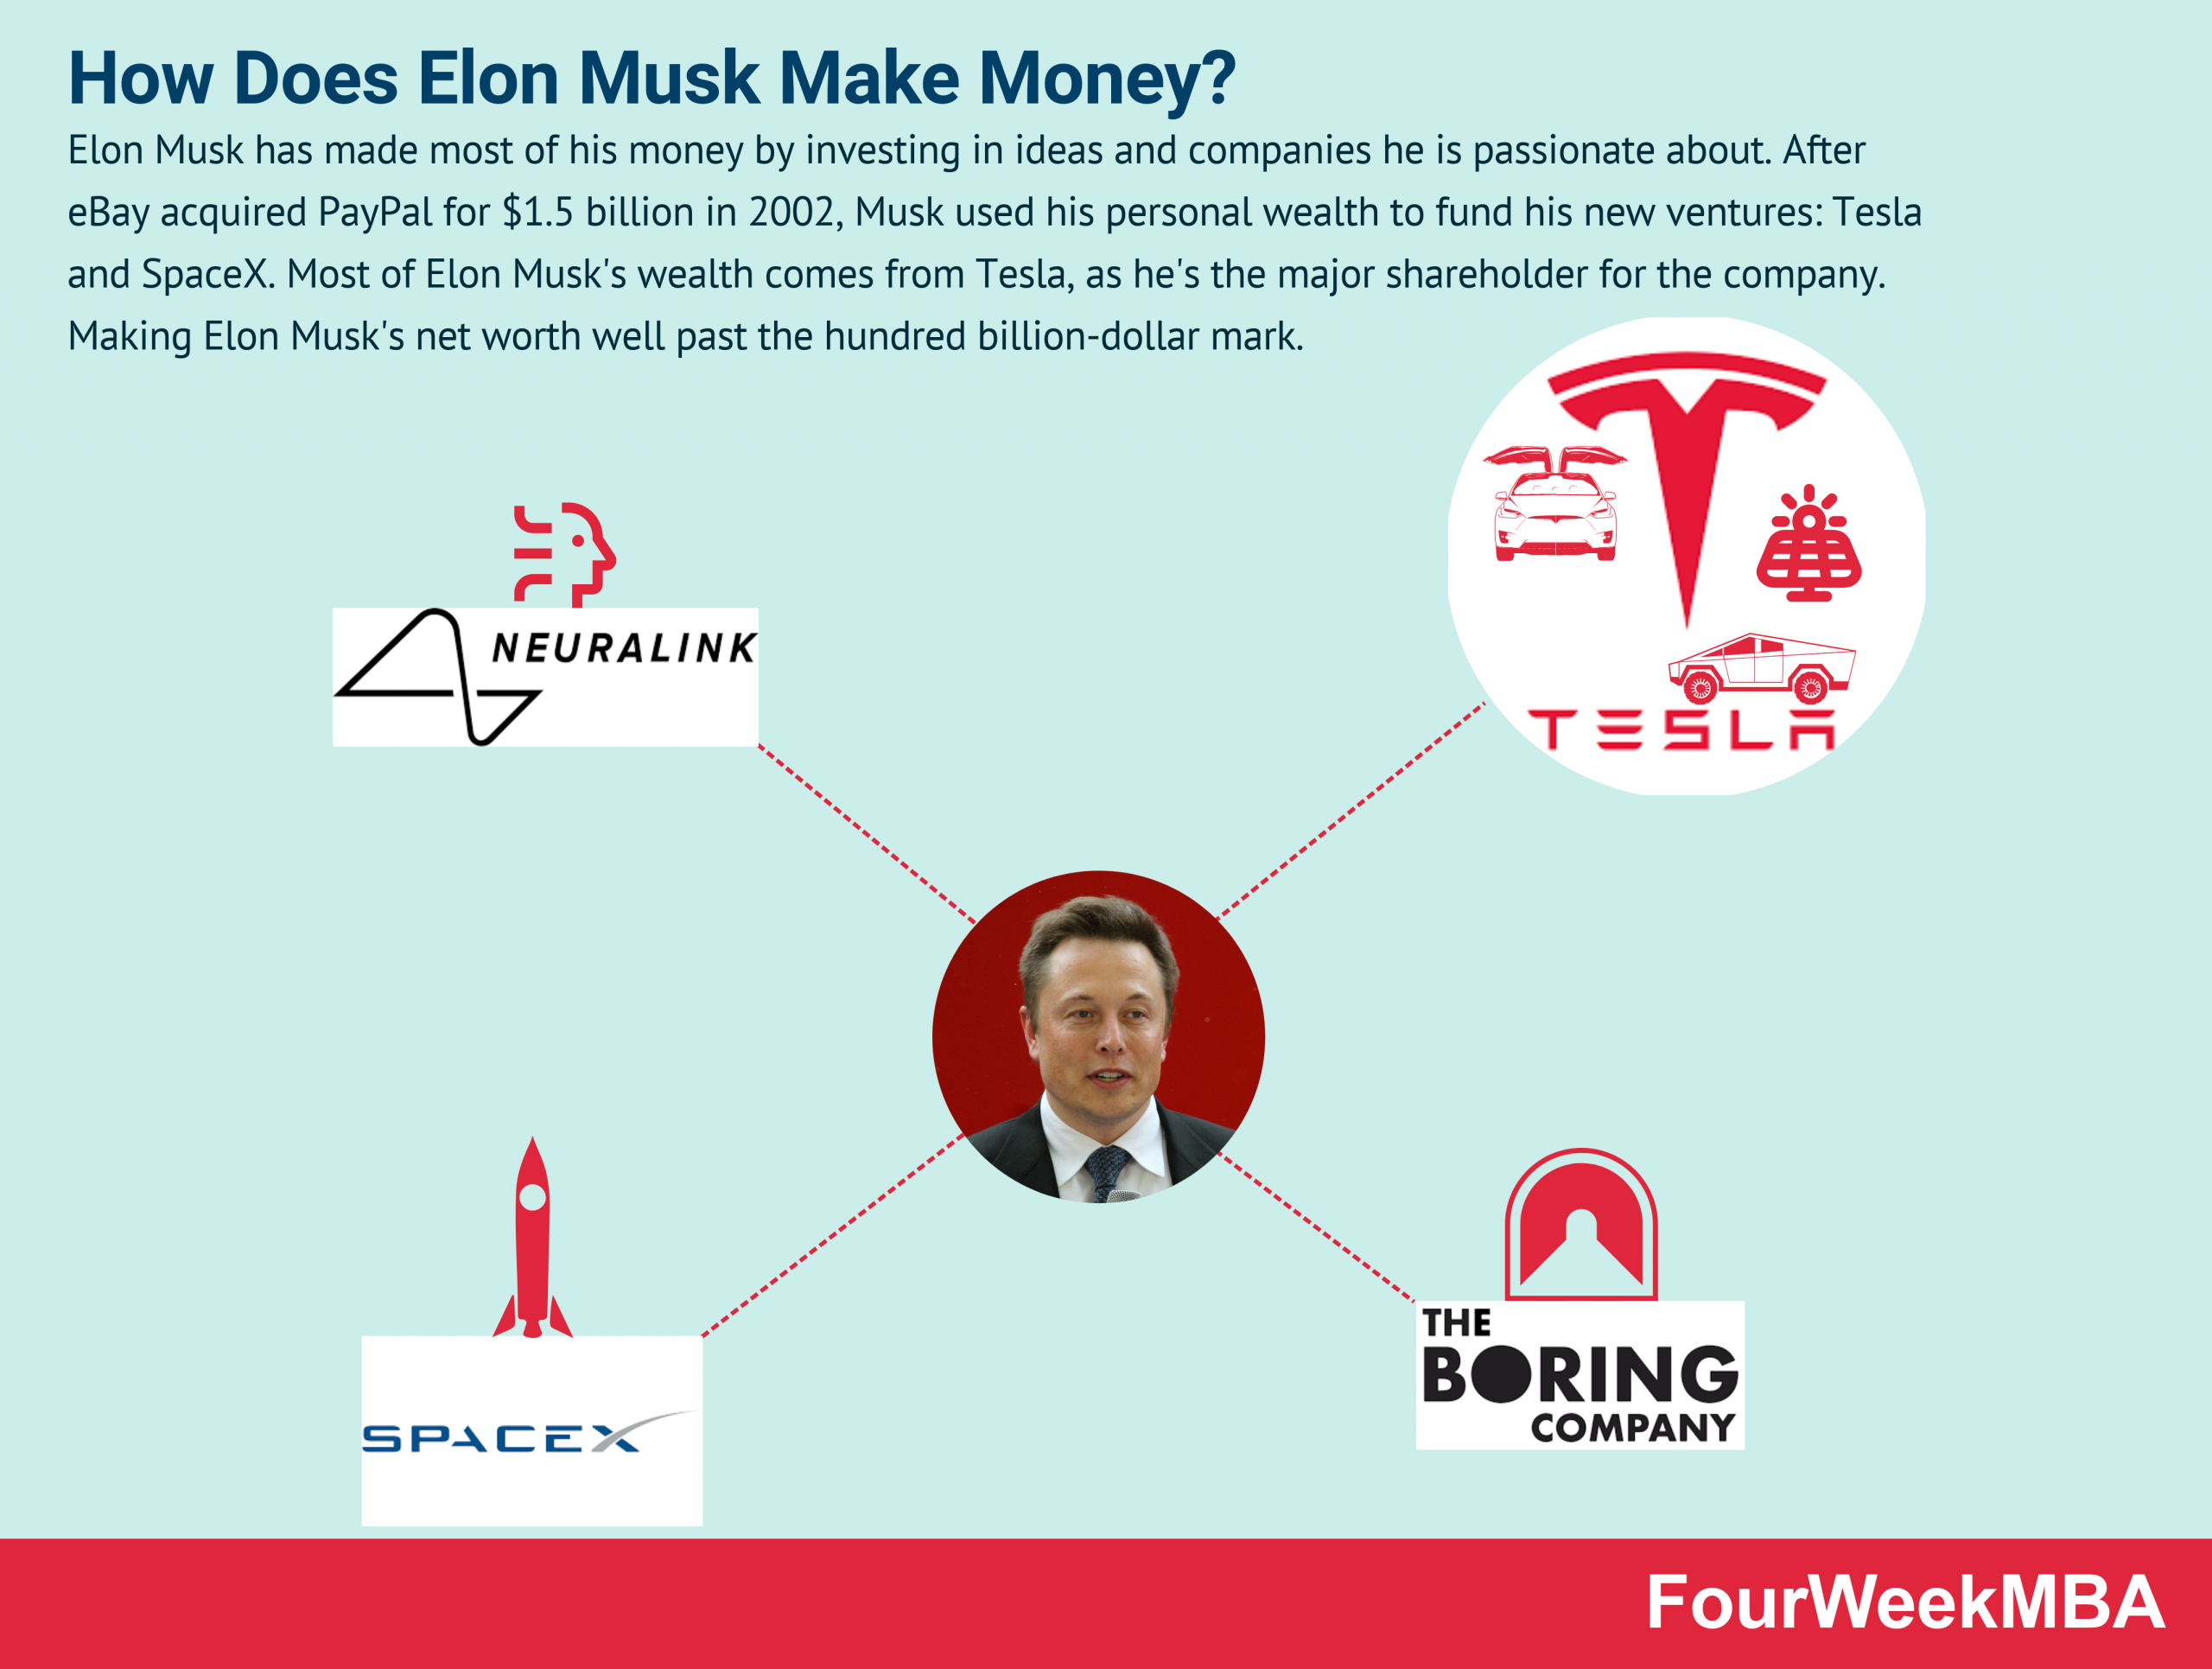 Does Elon Musk make money from Tesla?